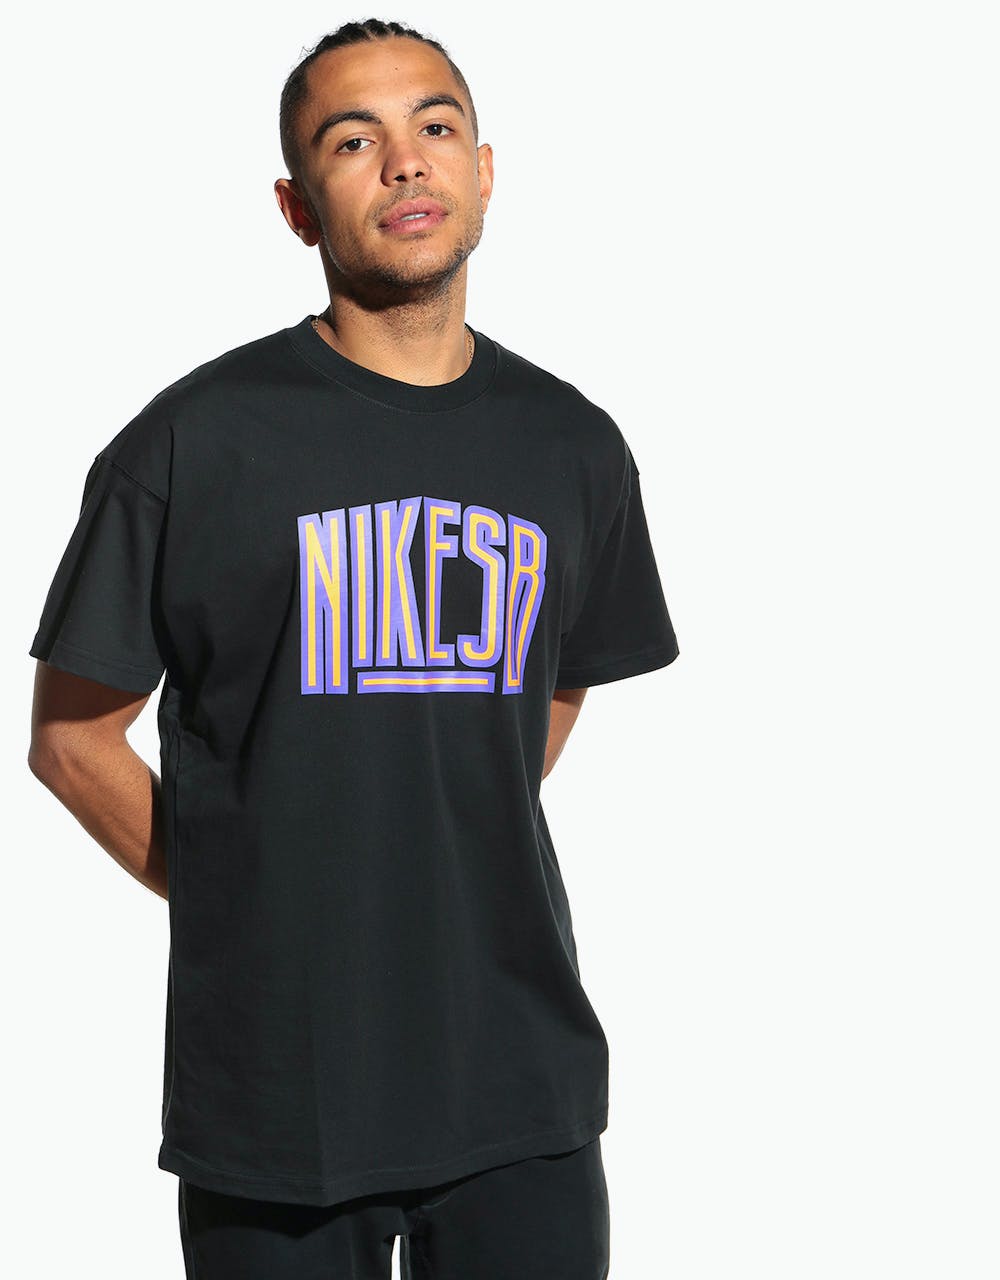 Nike SB Force T-Shirt - Black